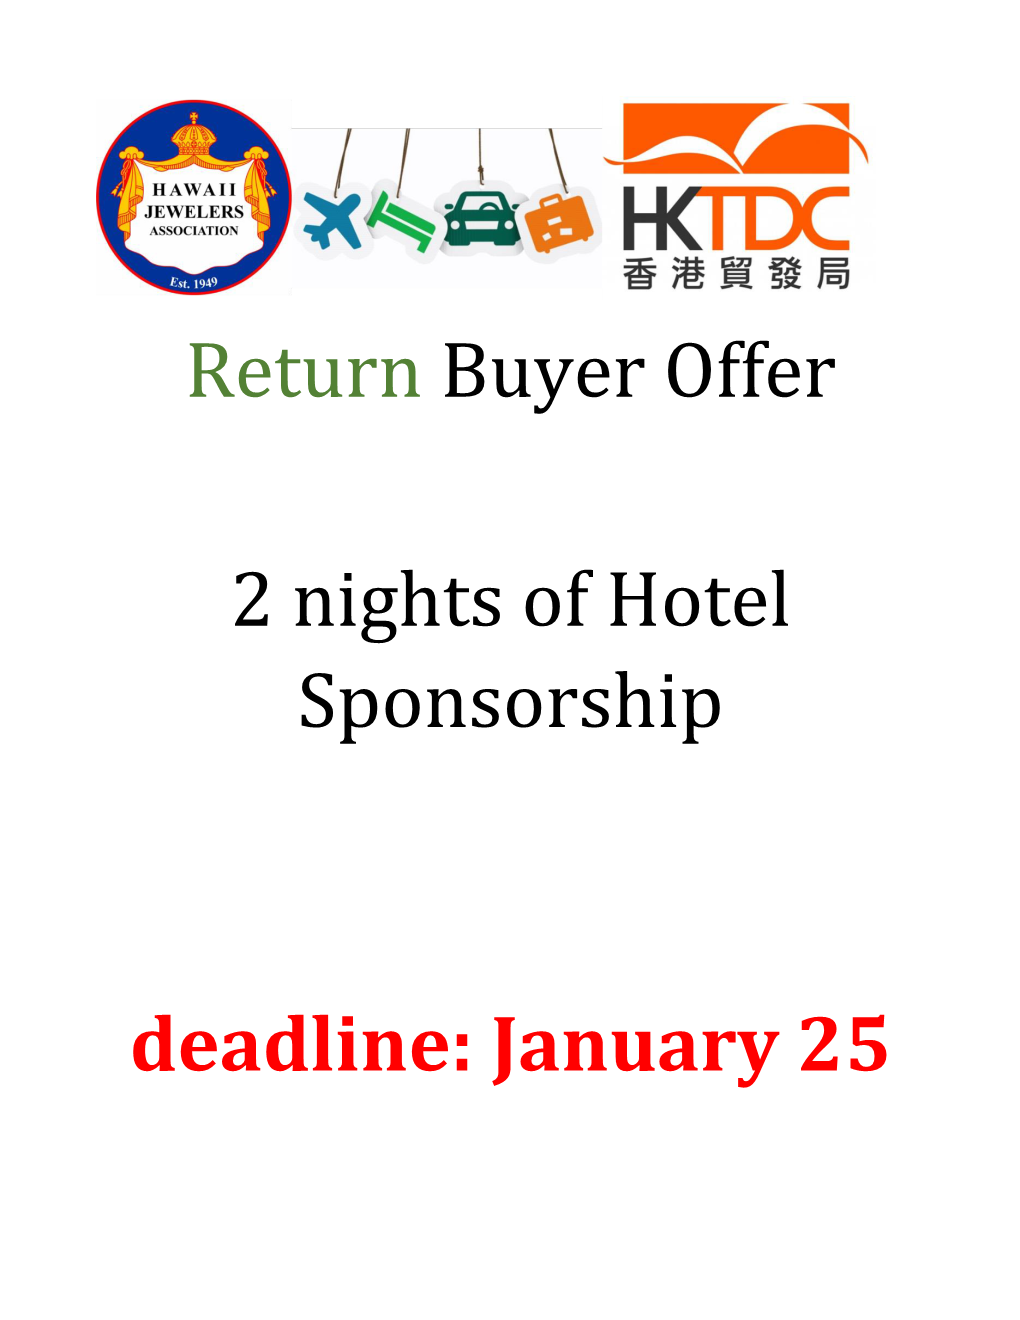 Return Buyer Offer 2 Nights of Hotel